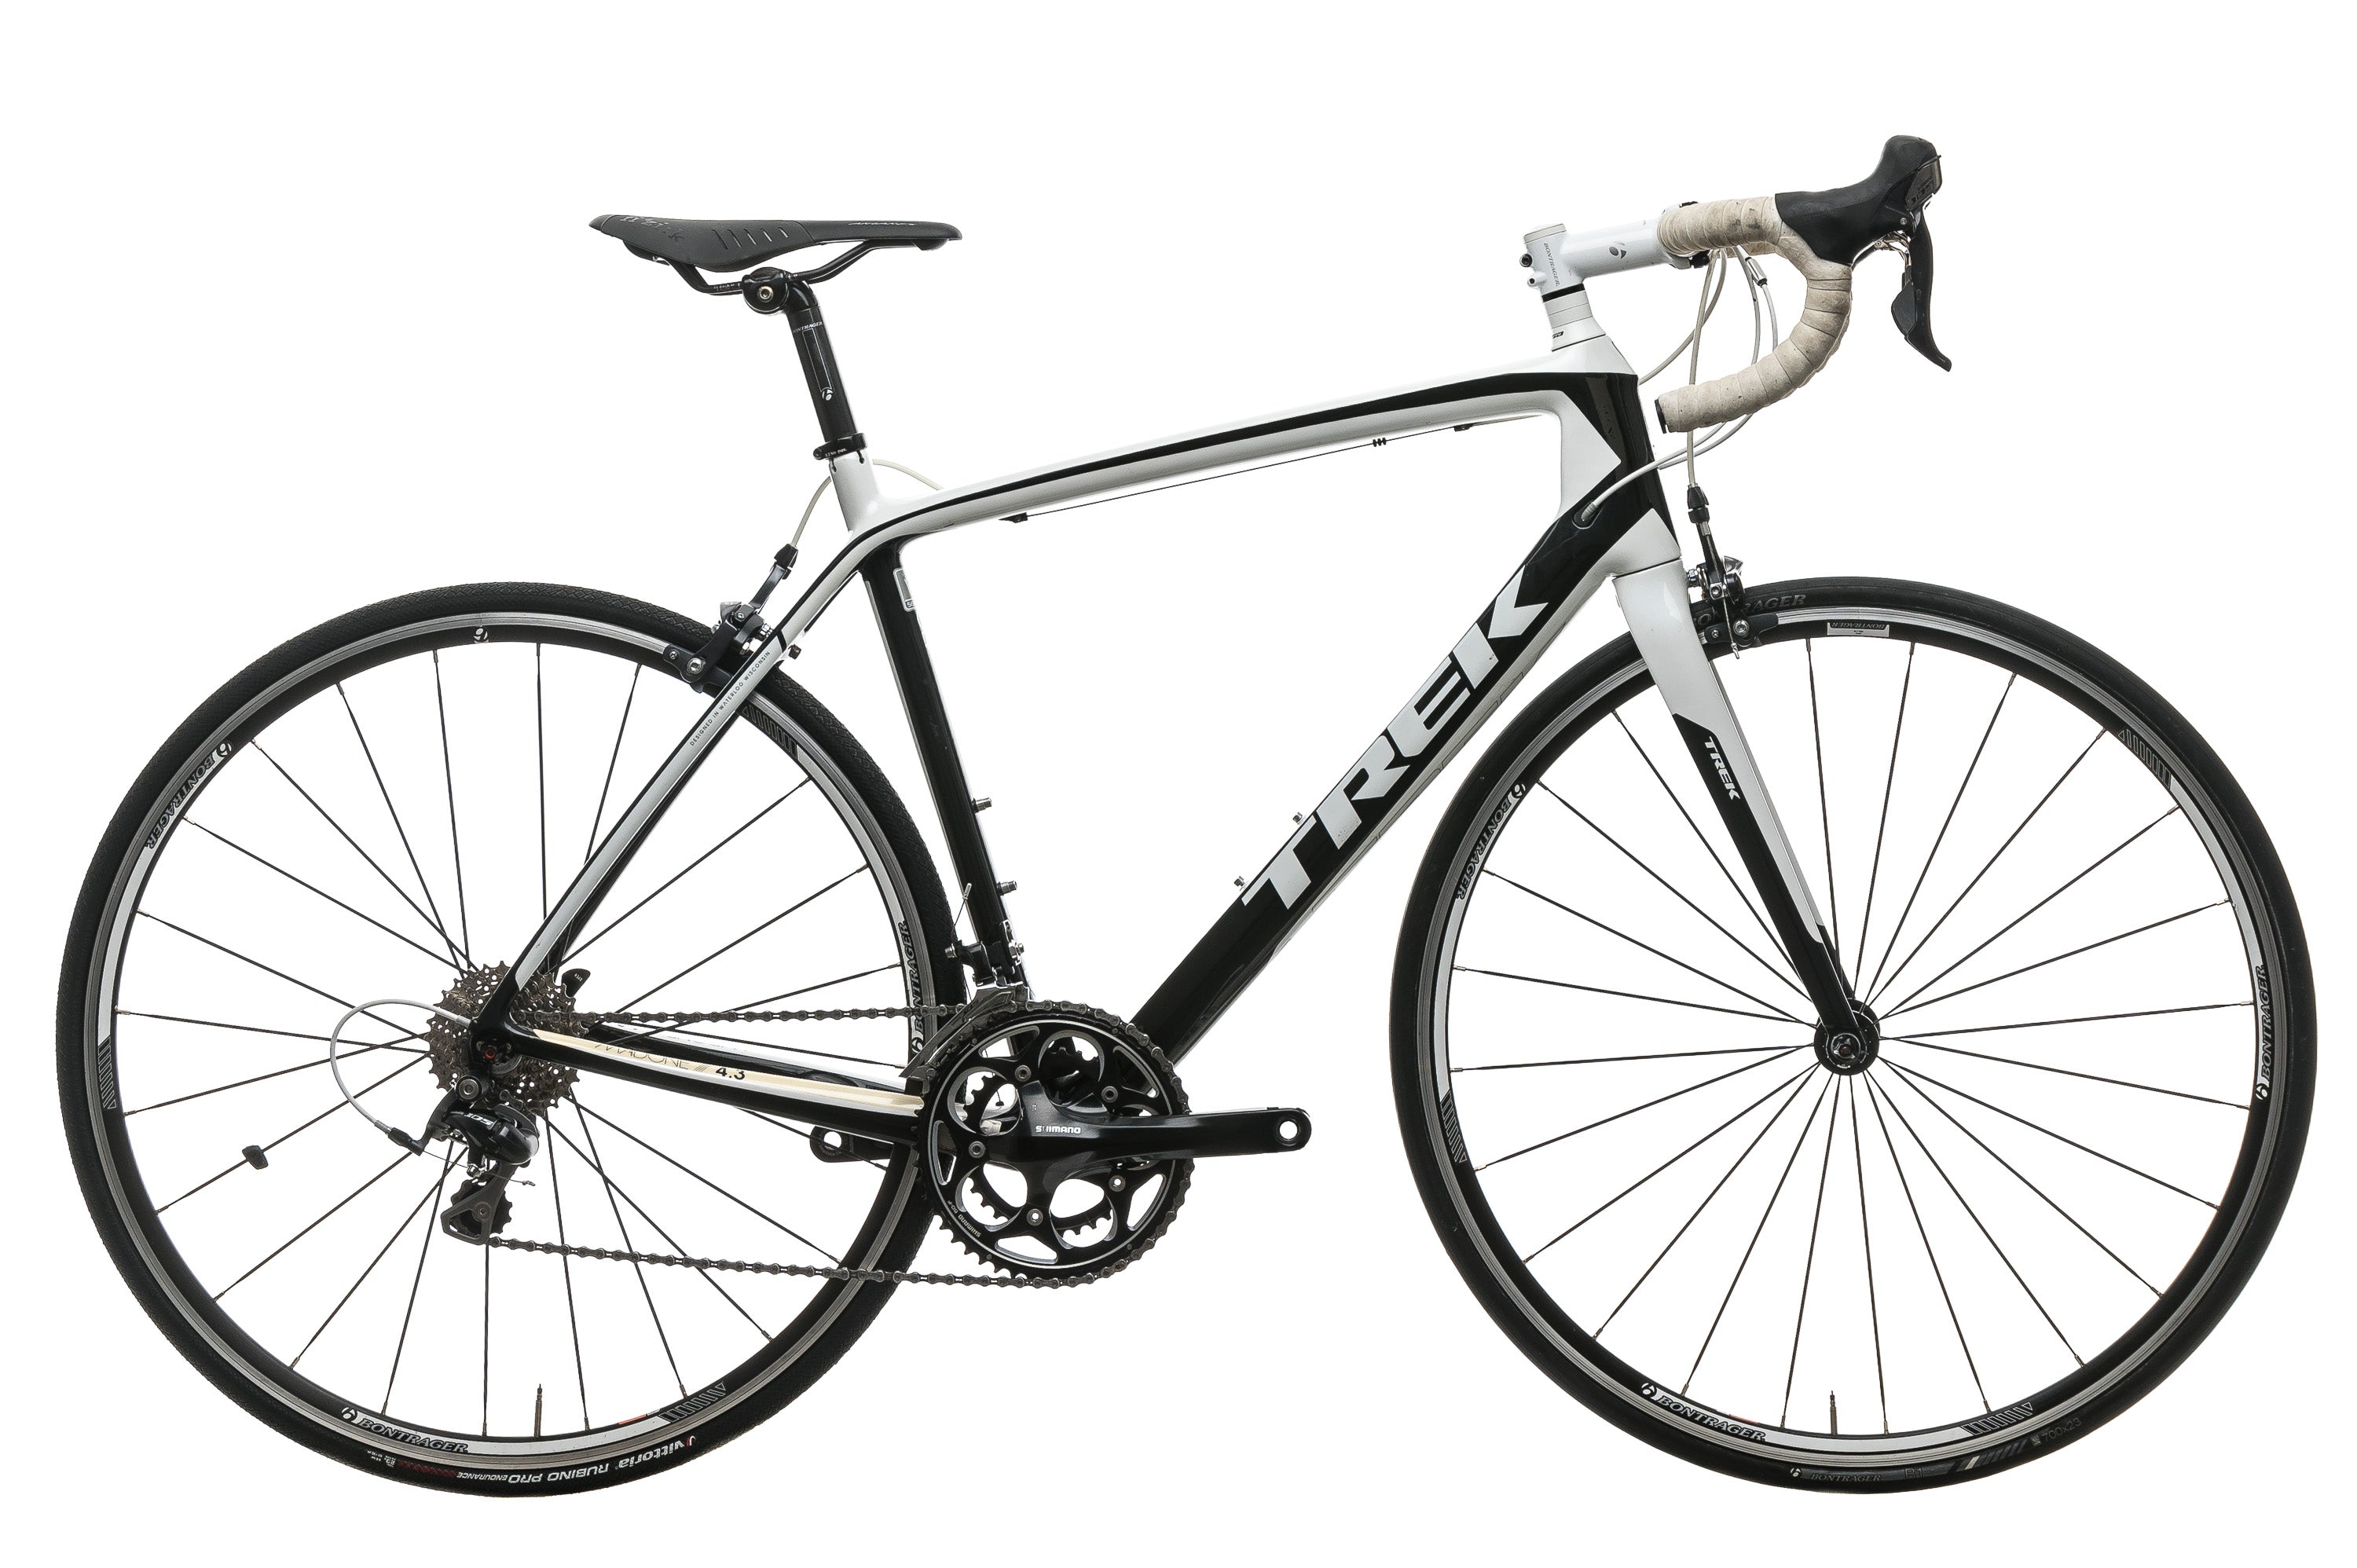 Trek Madone 4.3 H2 Compact Road Bike - 2014, 56c | The Pro's Closet